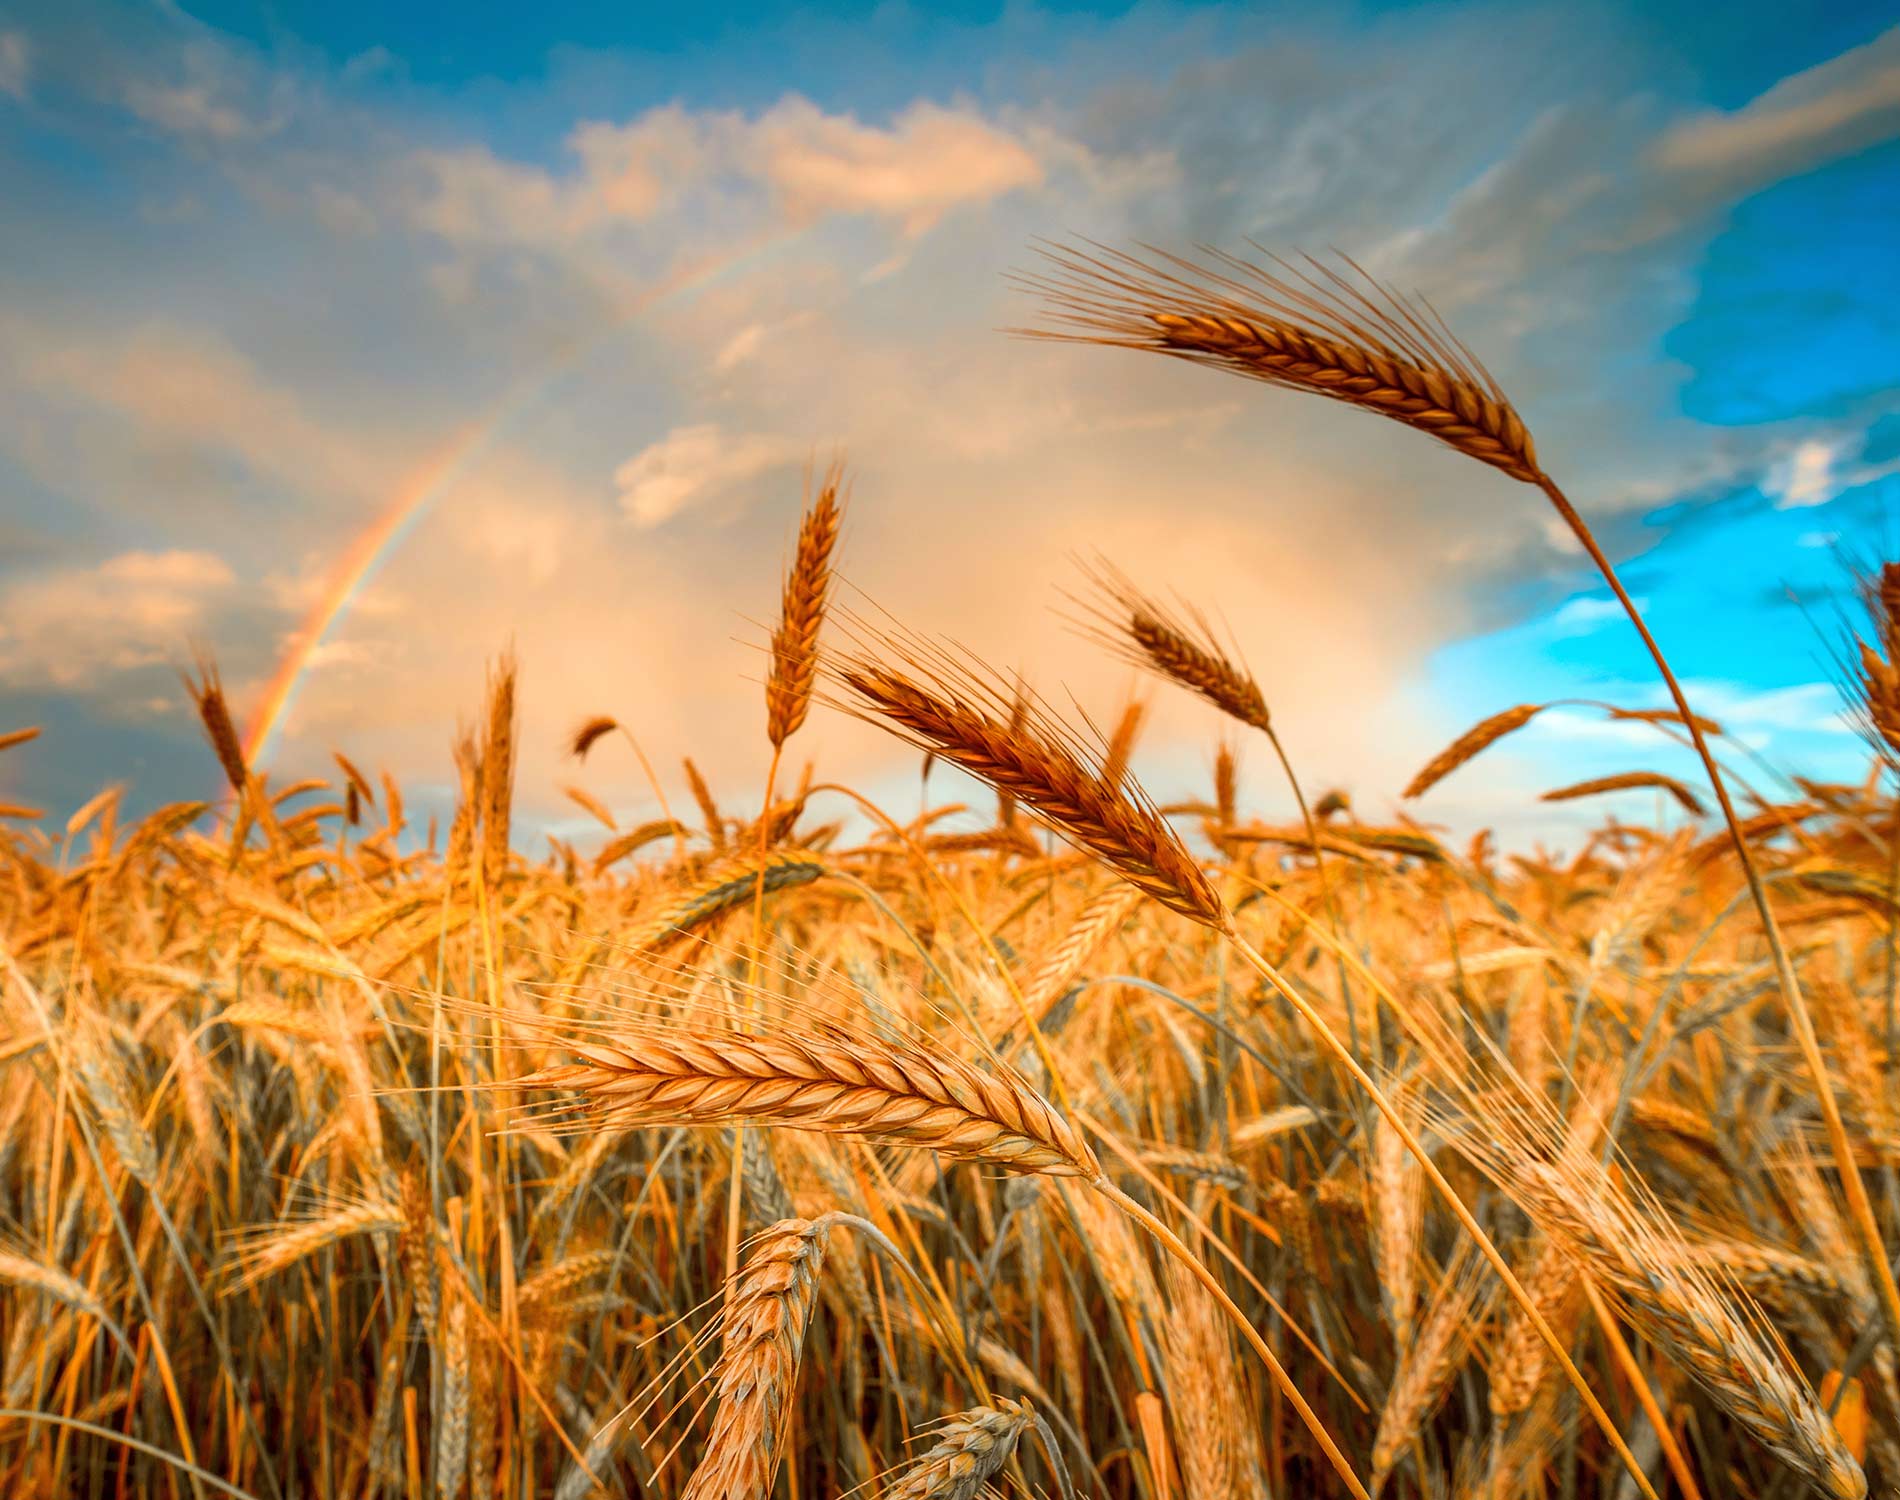 Field of golden growth barley